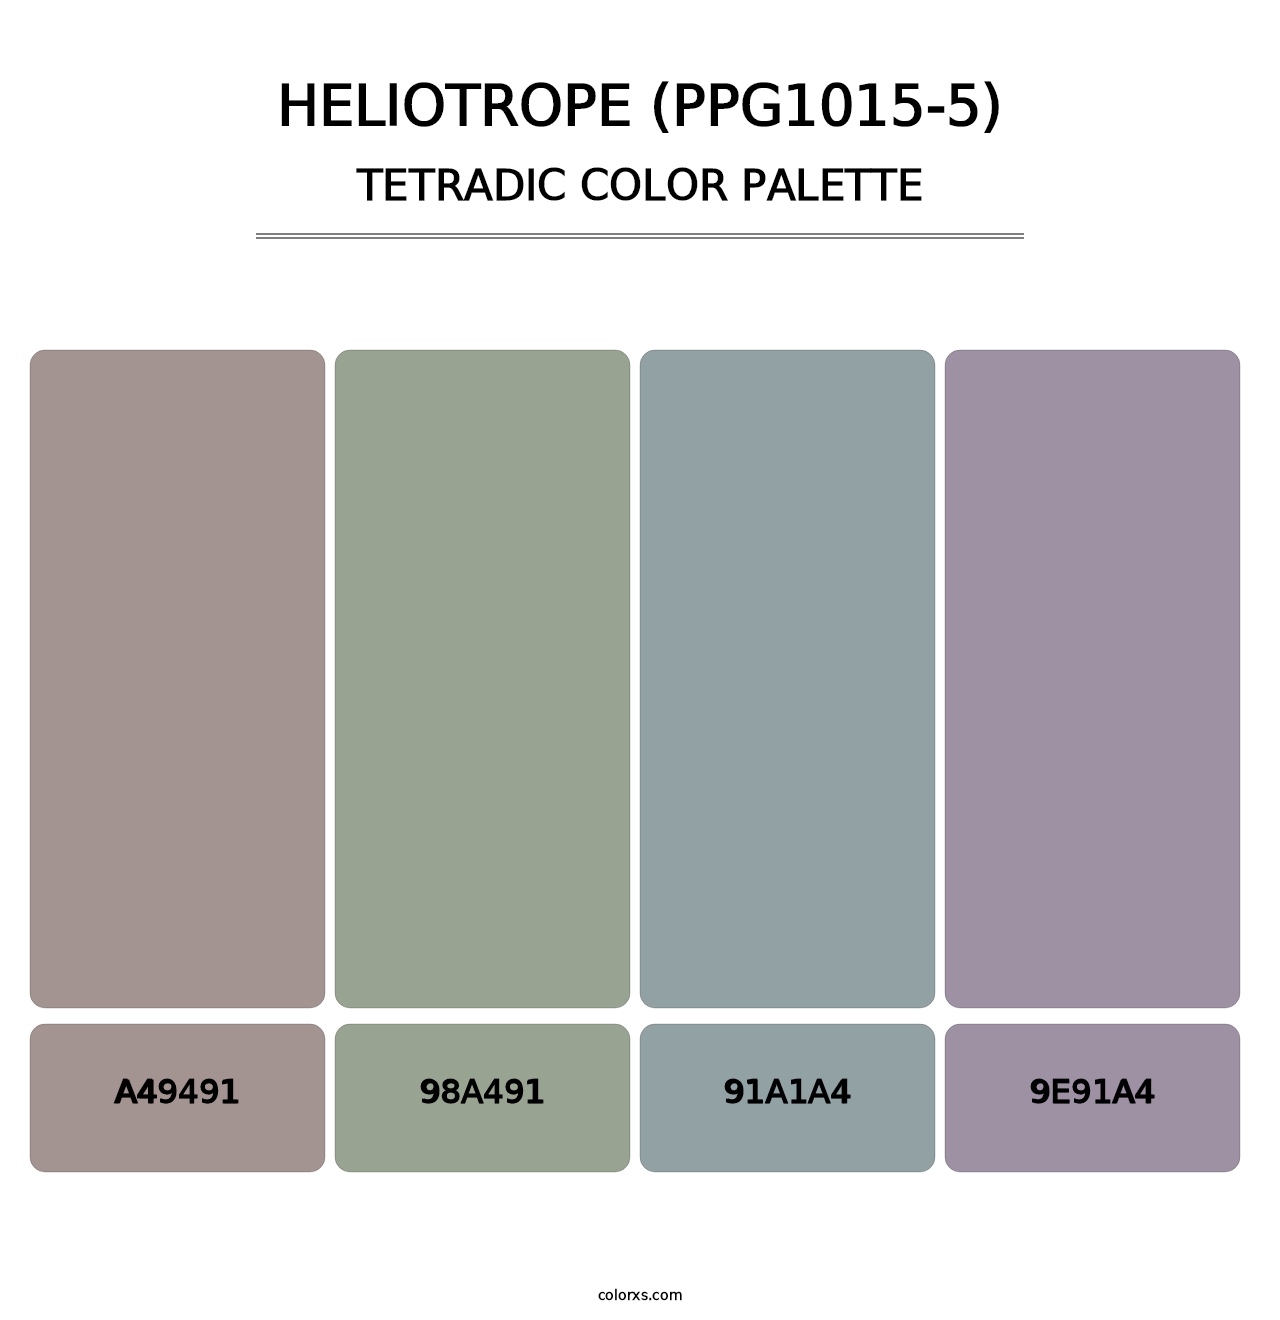 Heliotrope (PPG1015-5) - Tetradic Color Palette